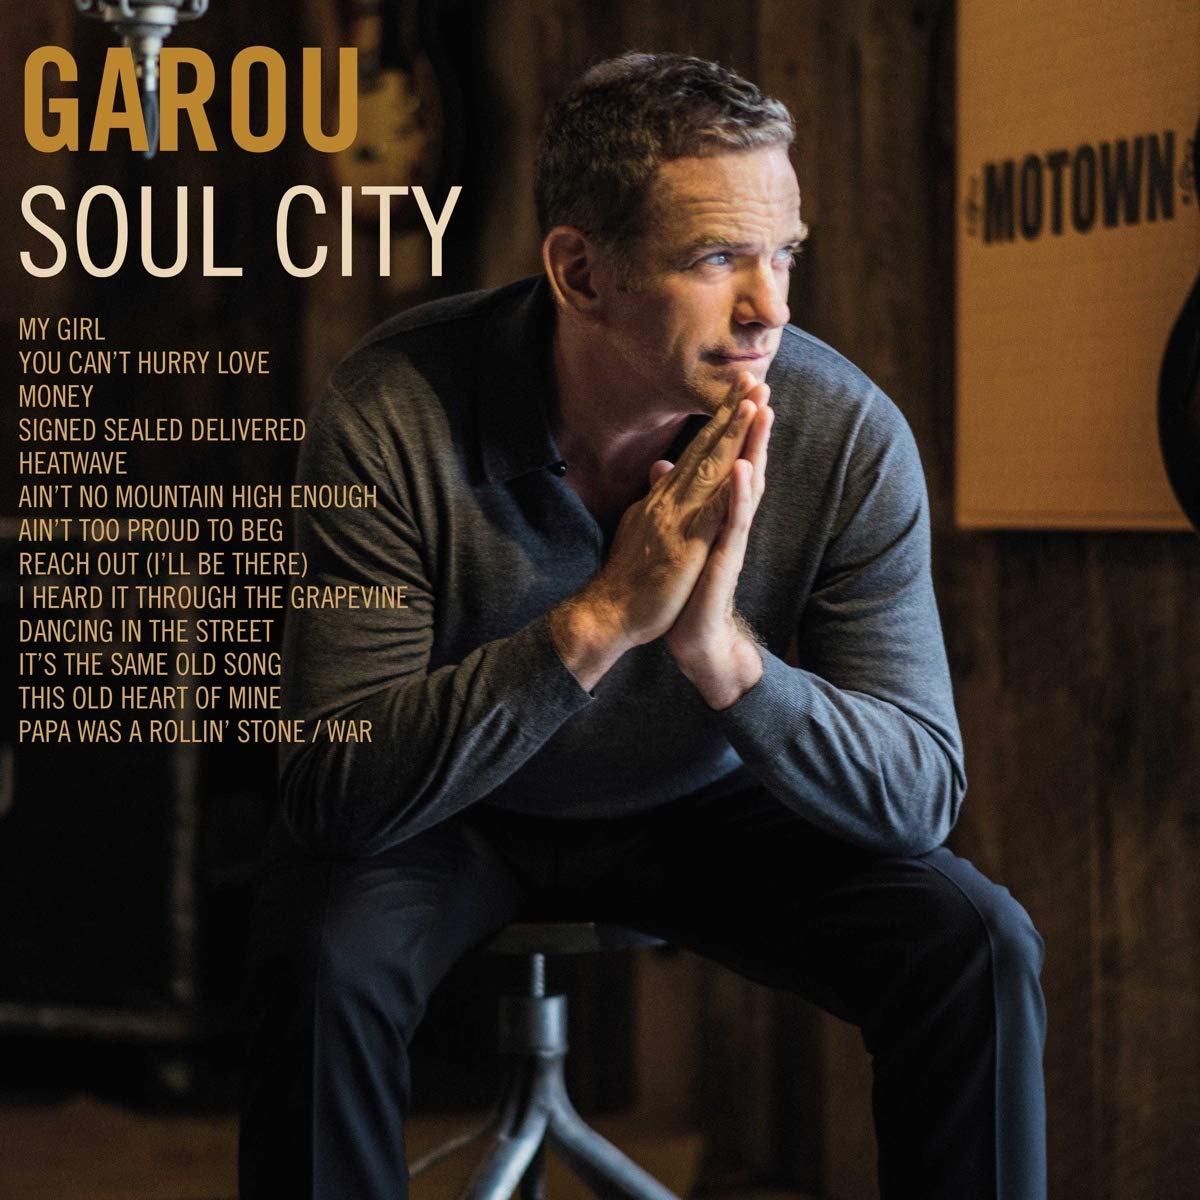 Garou - Soul City - Vinyle